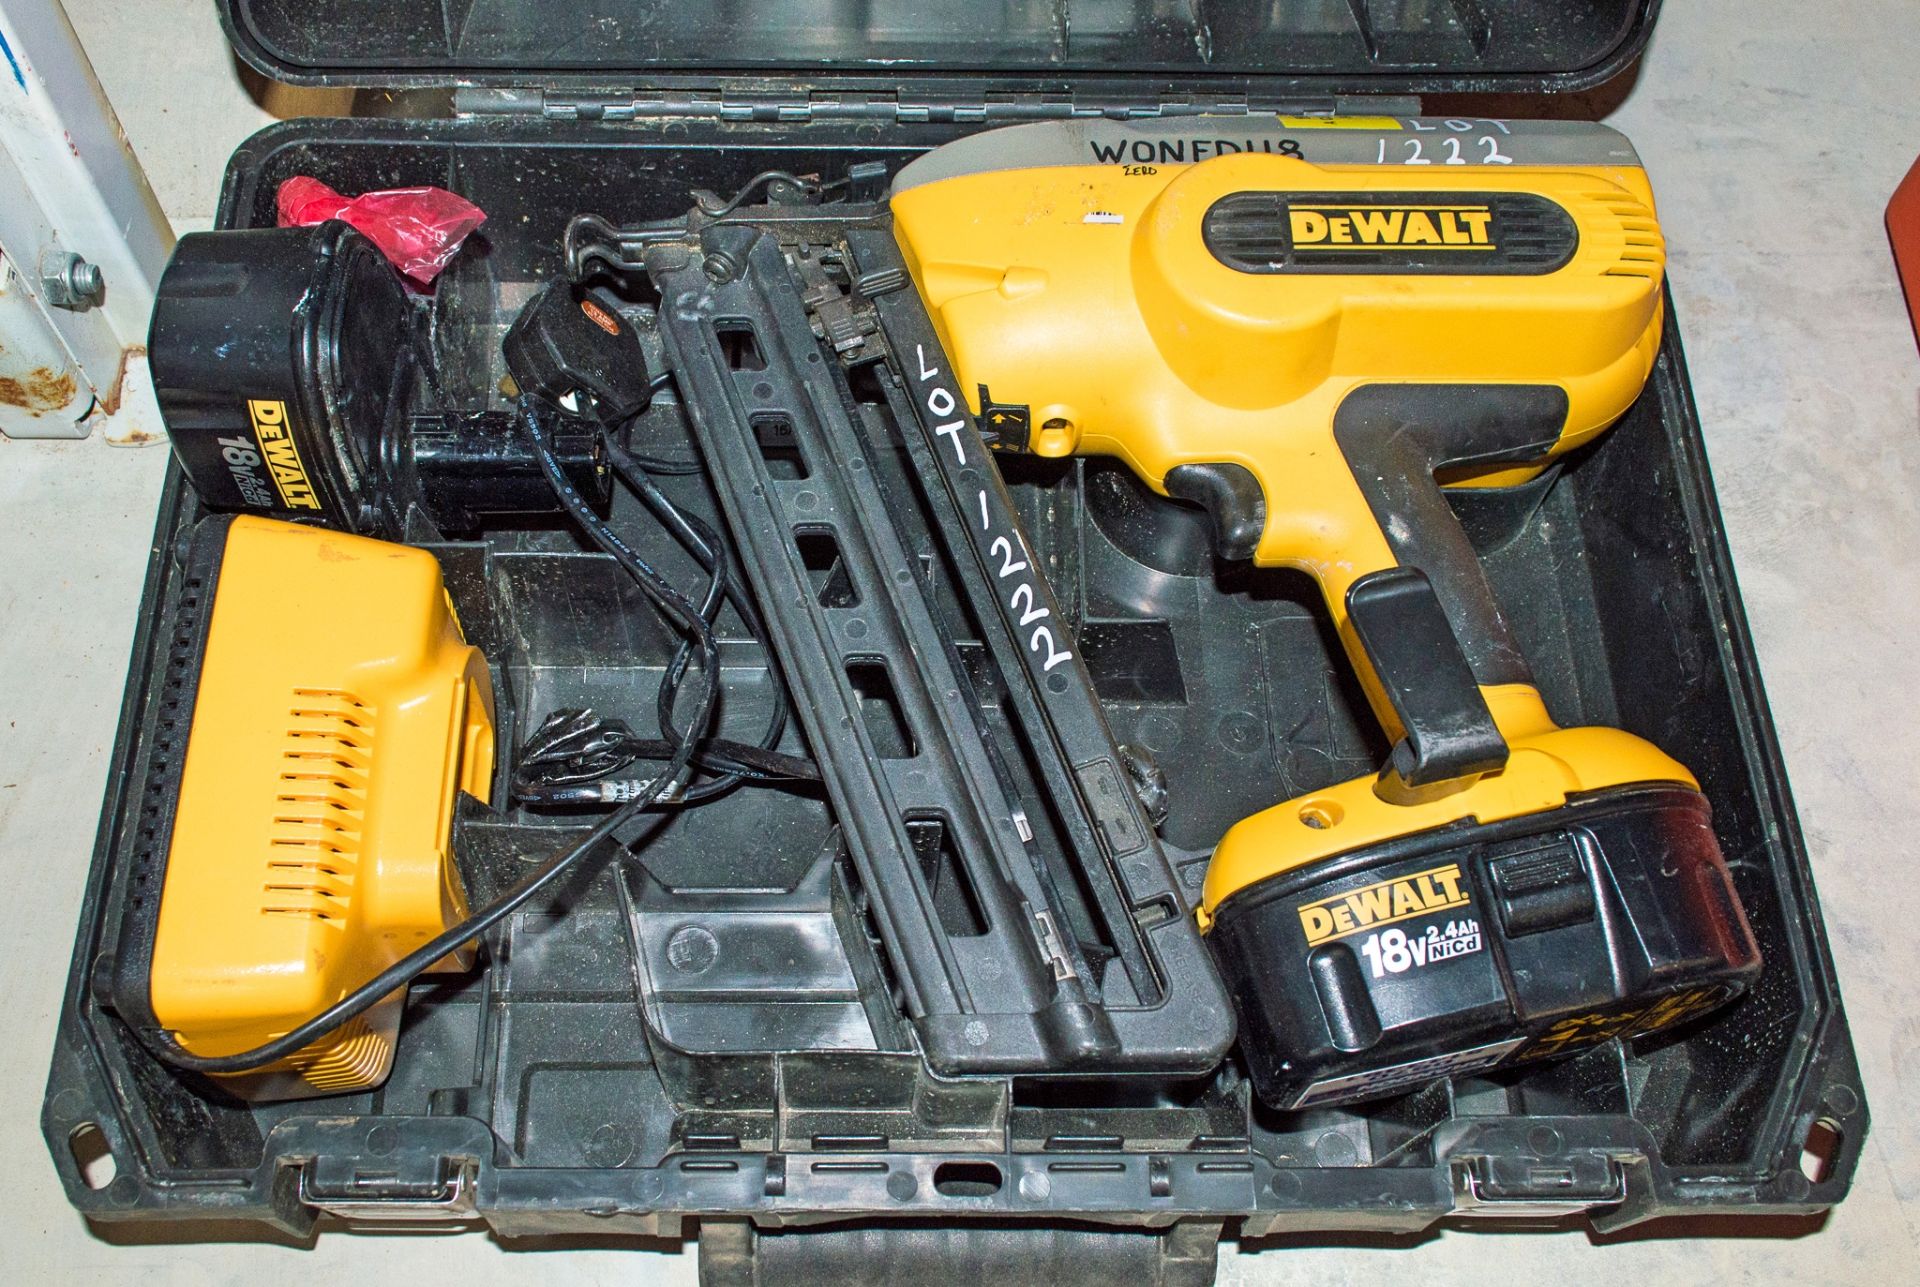 Dewalt XRP cordless nail gun c/w 2 batteries, charger & carry case WONED118